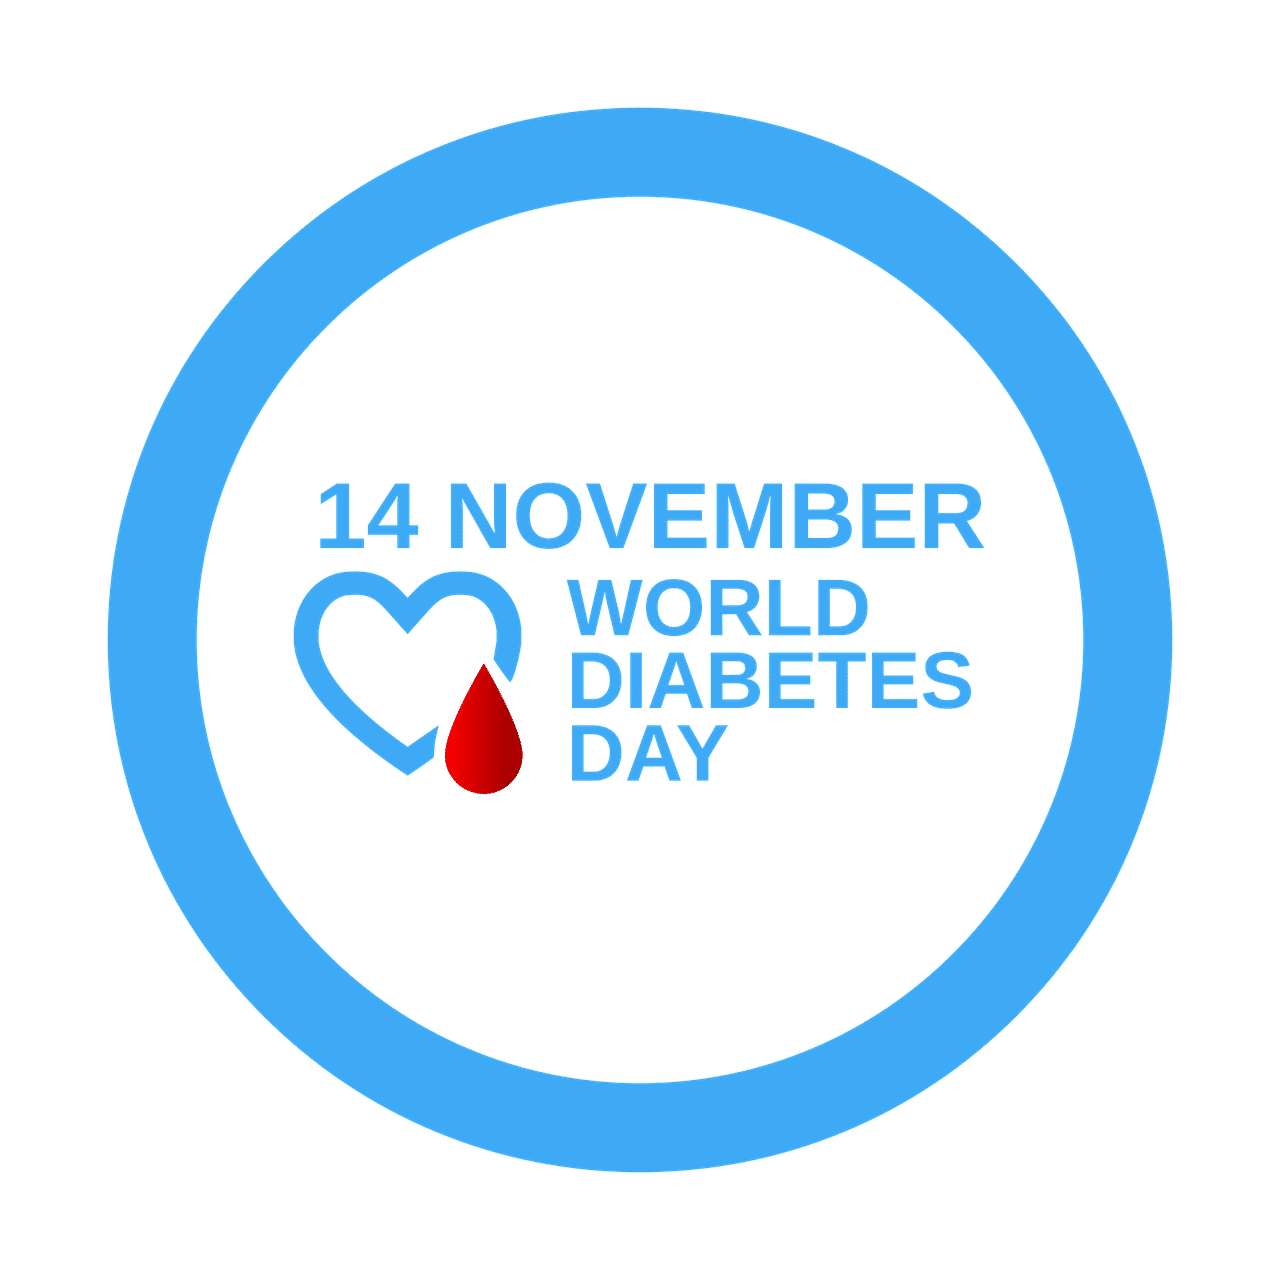 November 14th is World Diabetes Day Coast2Coast First Aid